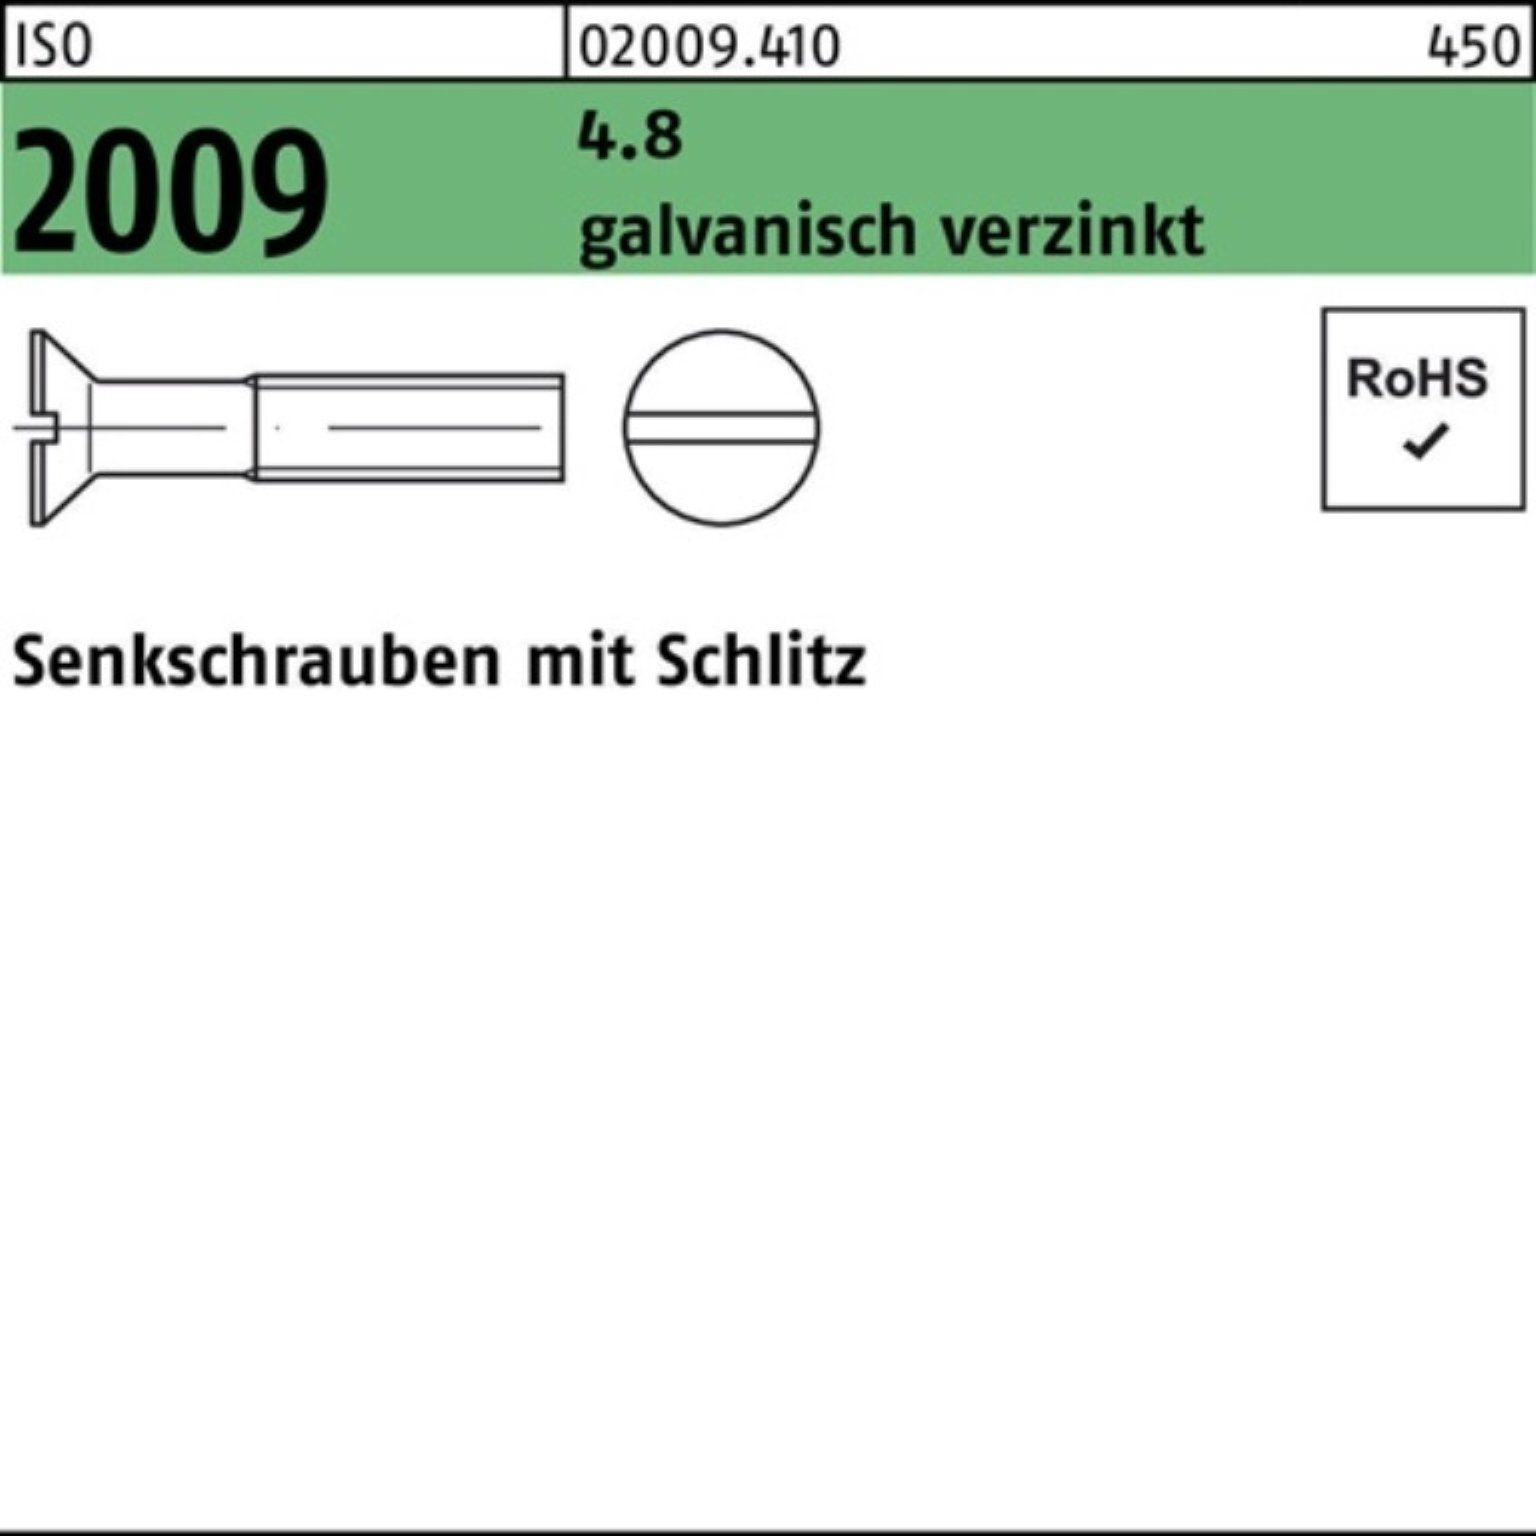 Reyher Senkschraube 1000er Pack Senkschraube 4.8 ISO S 1000 2009 Schlitz M3x 55 galv.verz